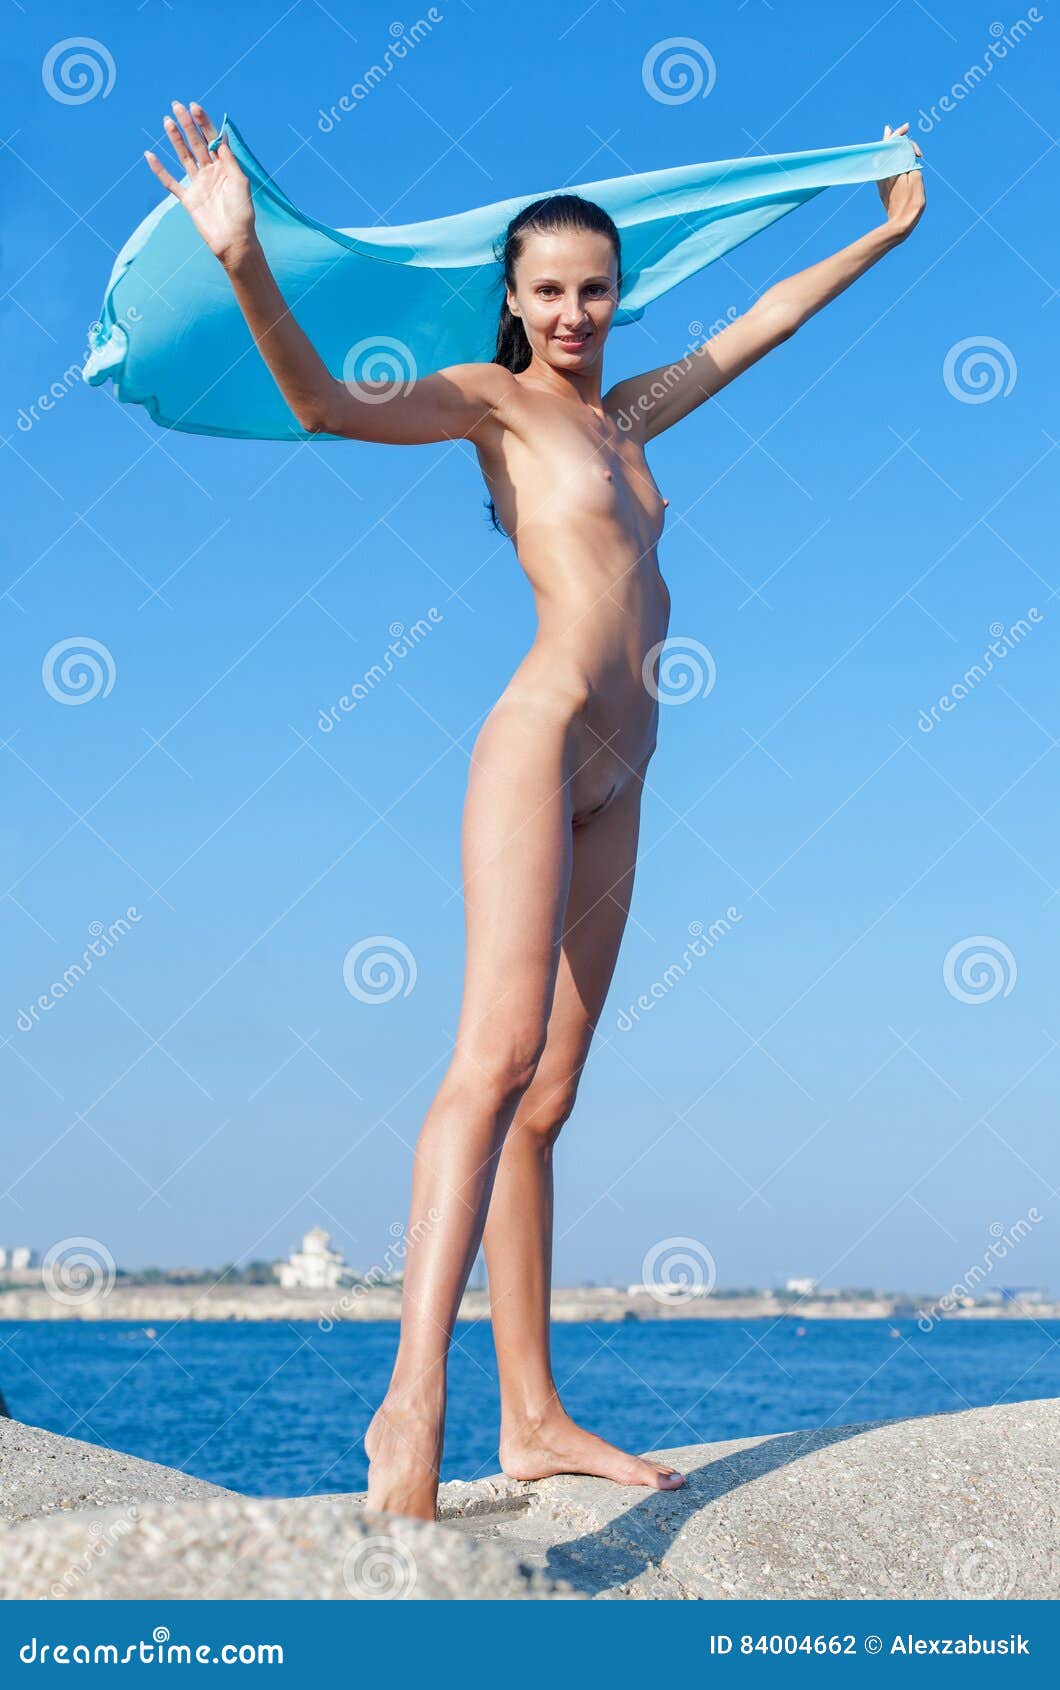 adam schon add naked skinny woman photo